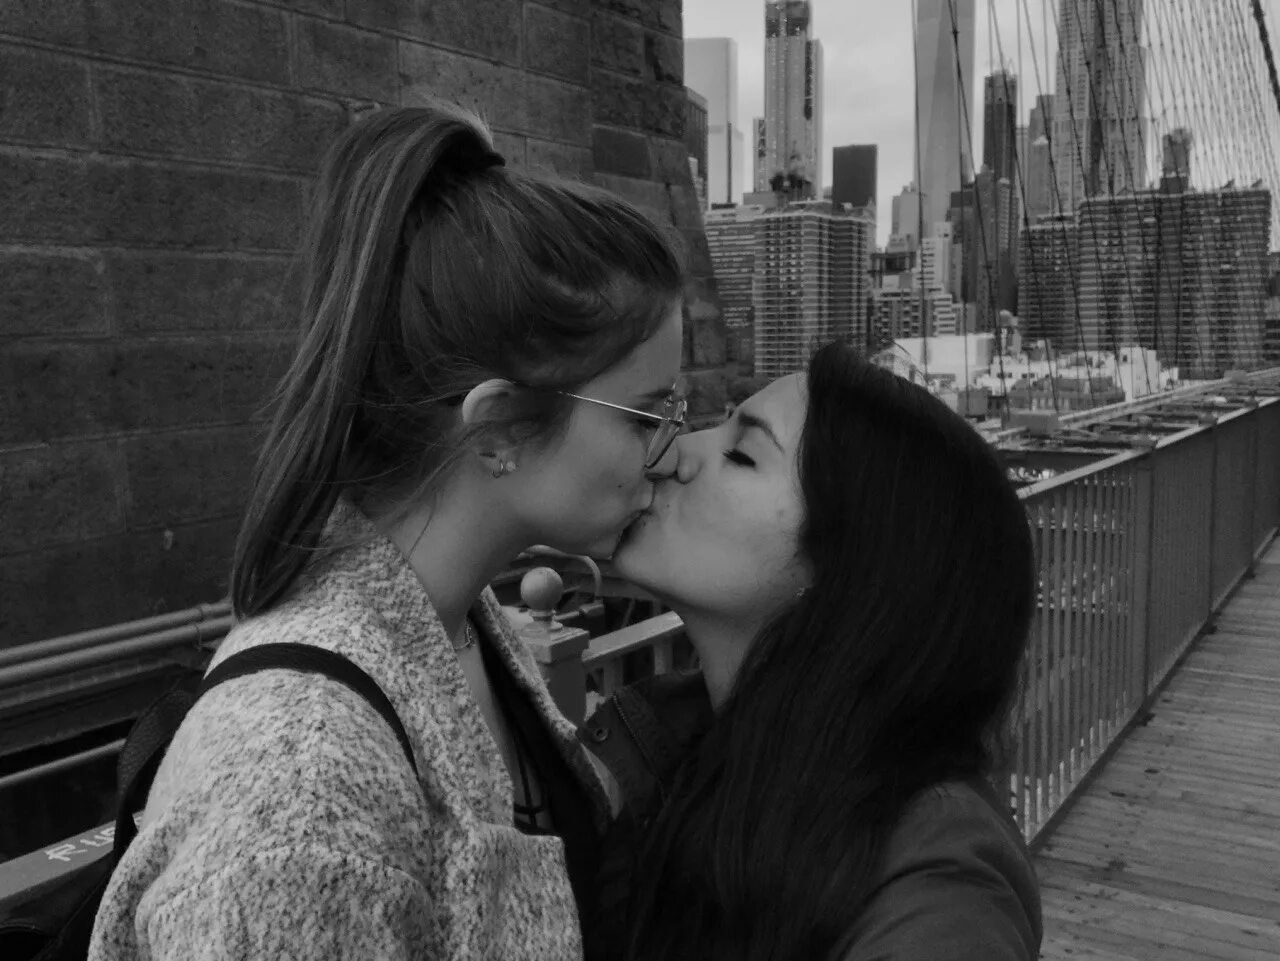 Поцелуй девушек. Девушки целуются. Поцелуй девушки с девушкой. Поцелуй двух девушек.